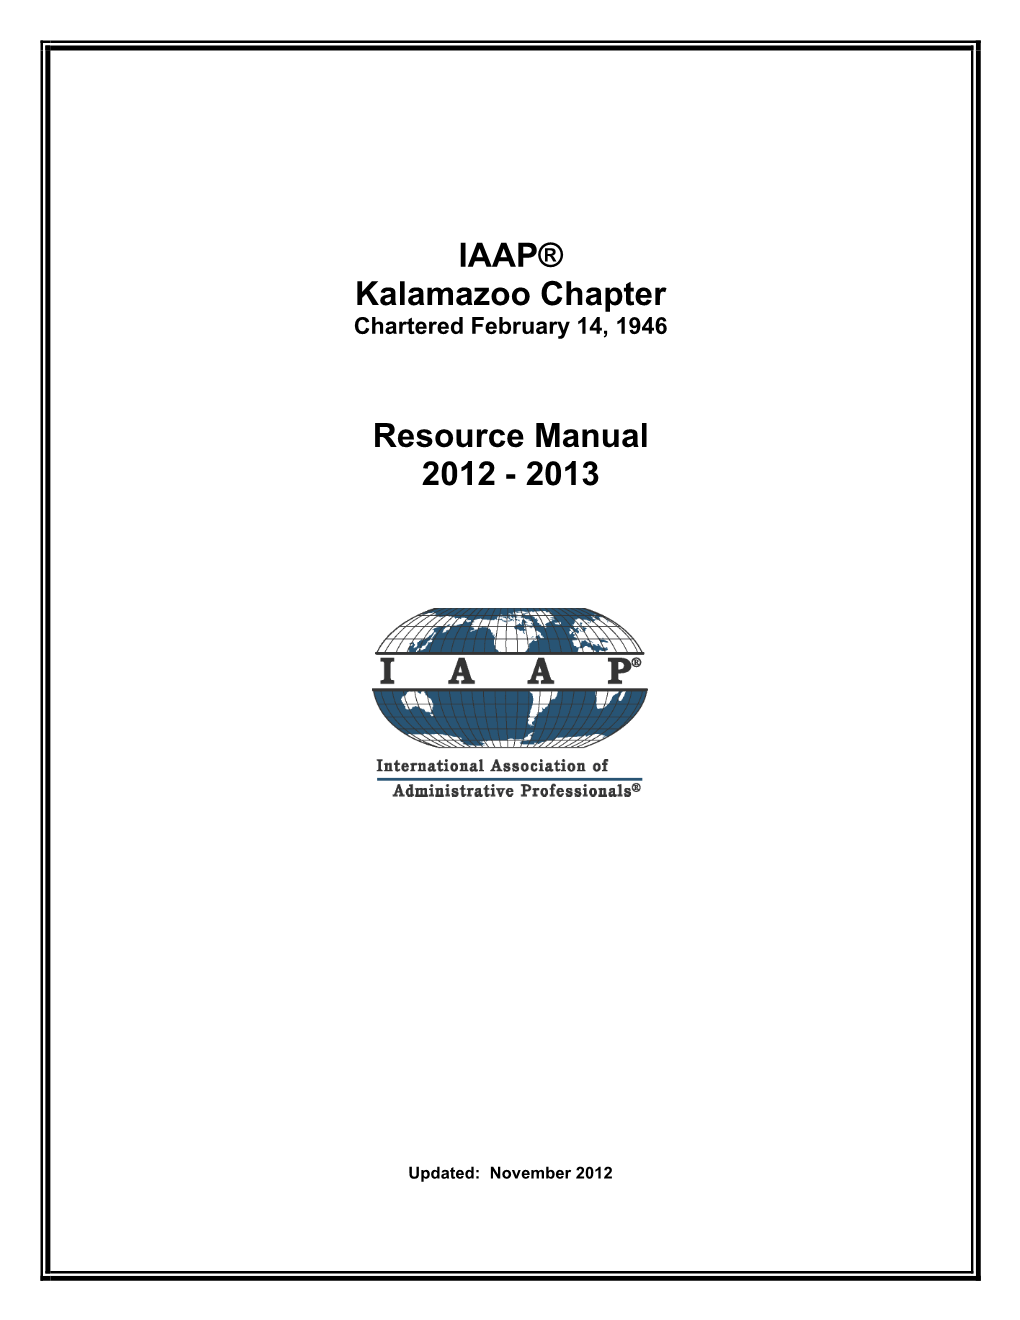 IAAP® Kalamazoo Chapter Resource Manual 2012